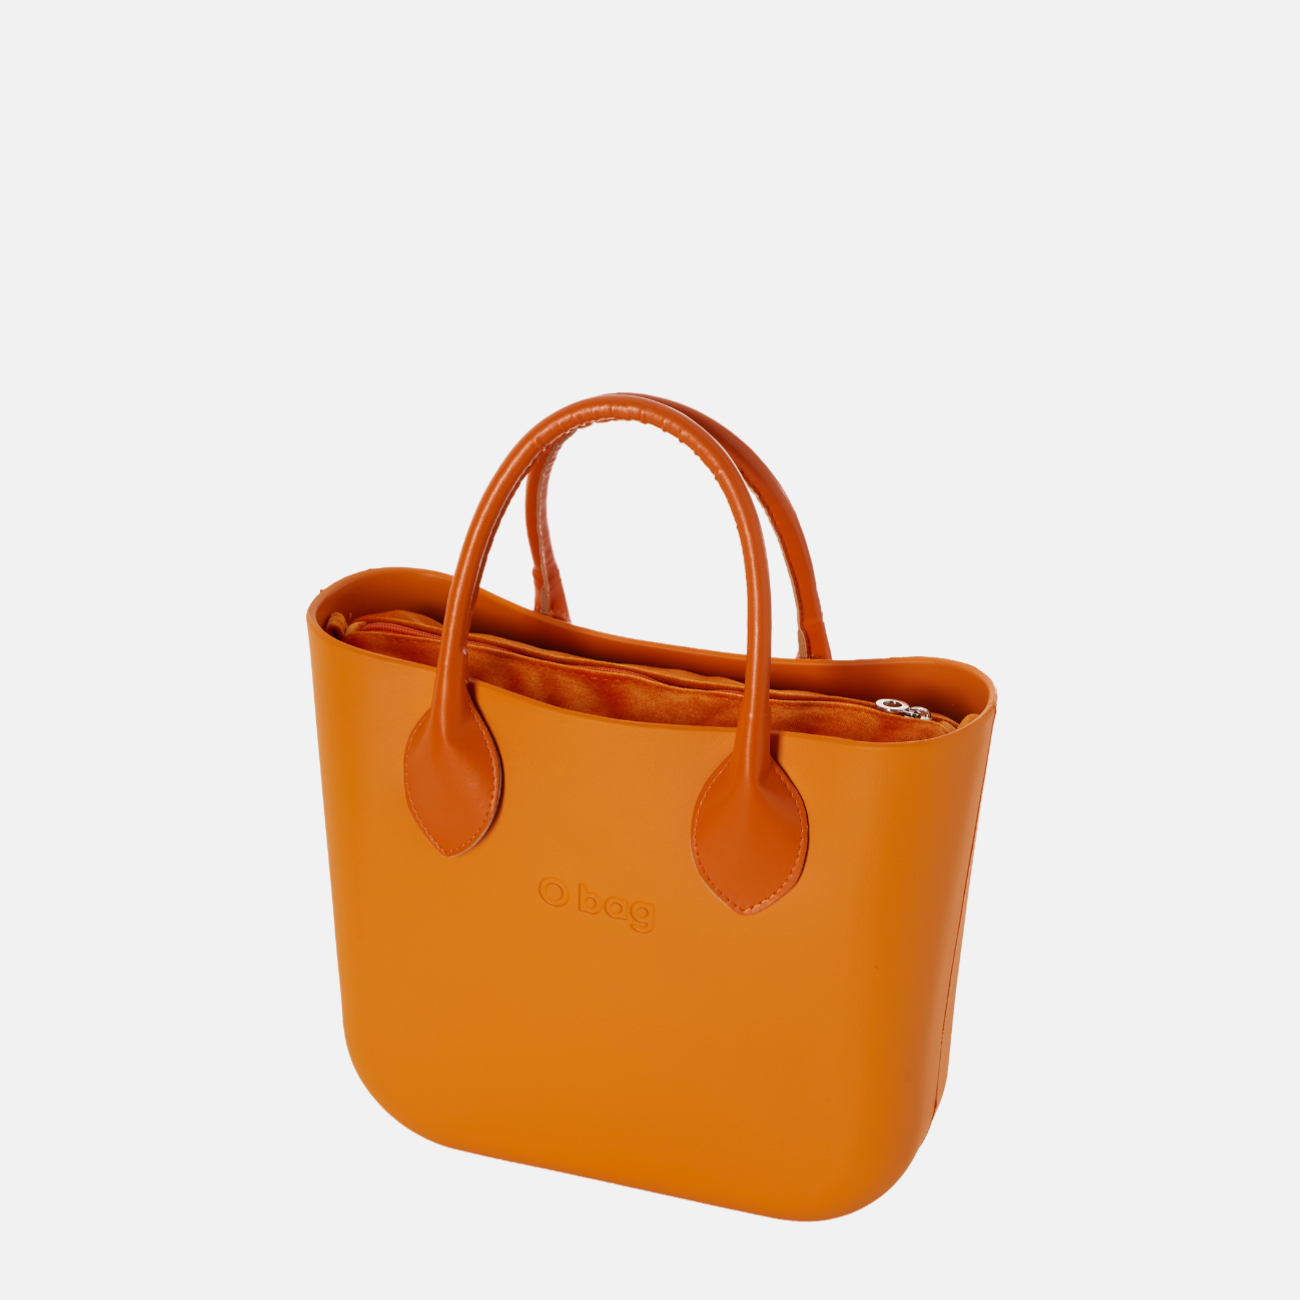 O bag mini kehribar tasarım çanta